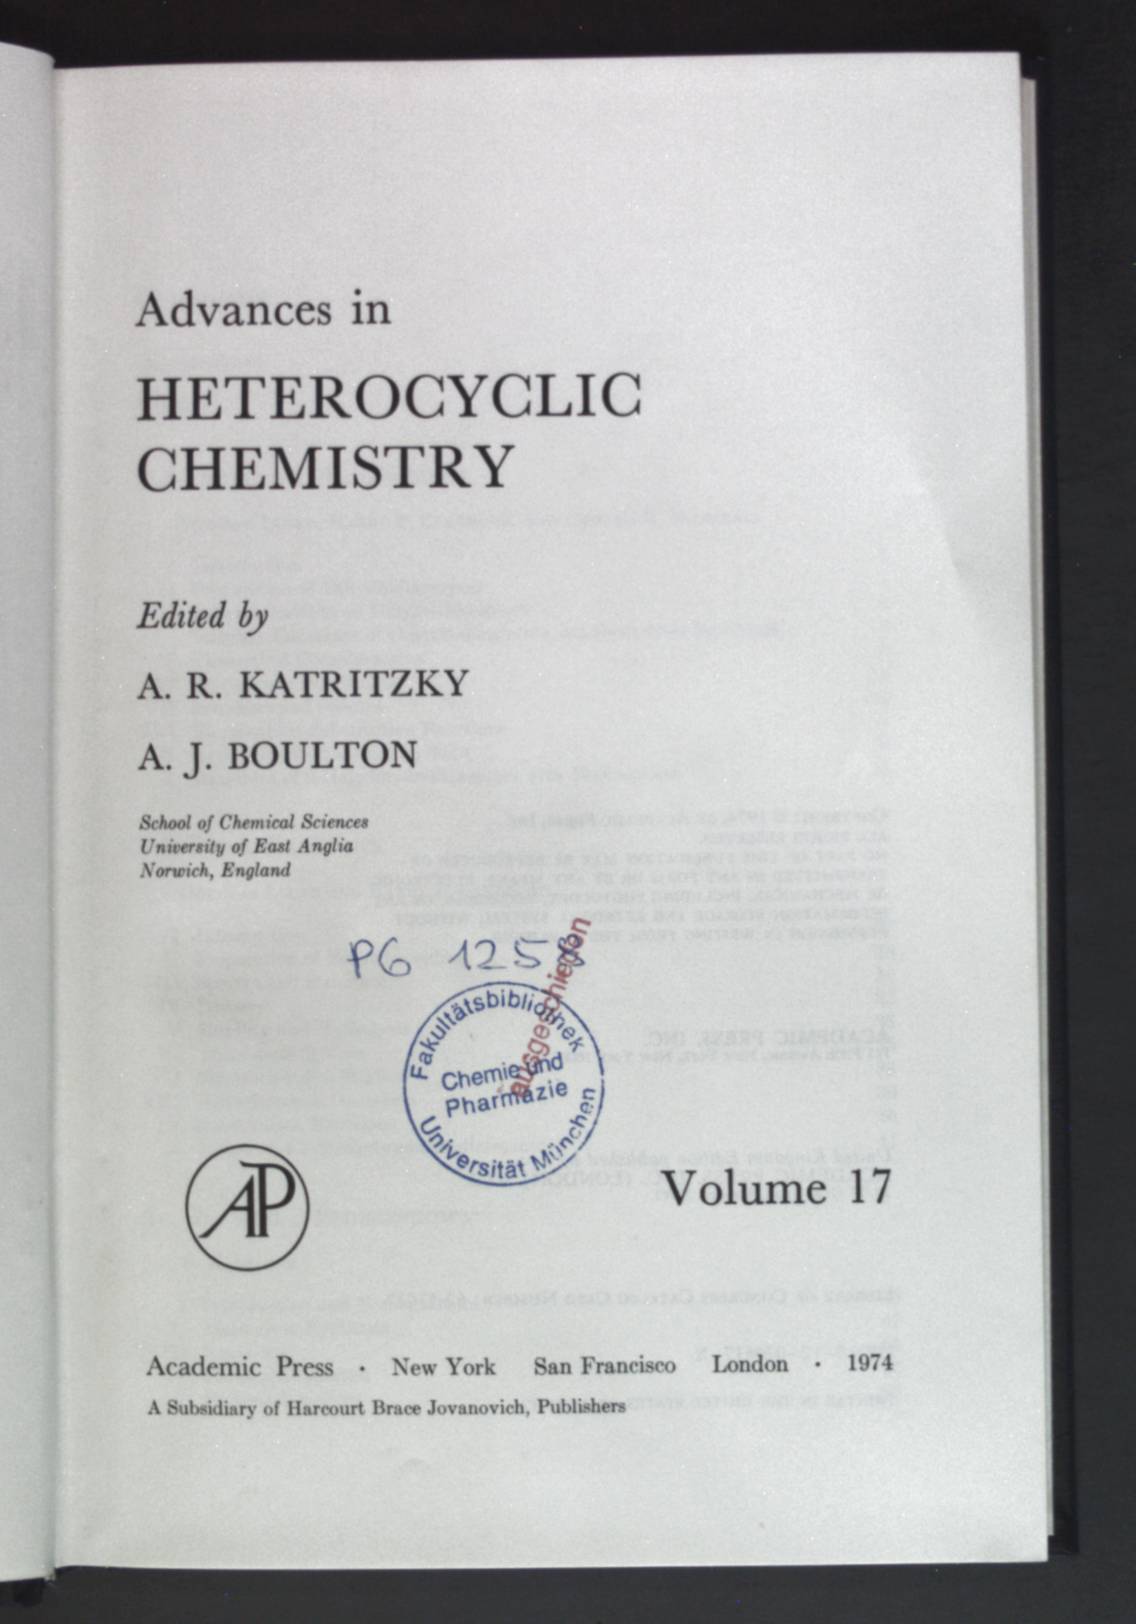 Advances in Heterocyclic Chemistry. Editorial Advisory Board: Volume 17